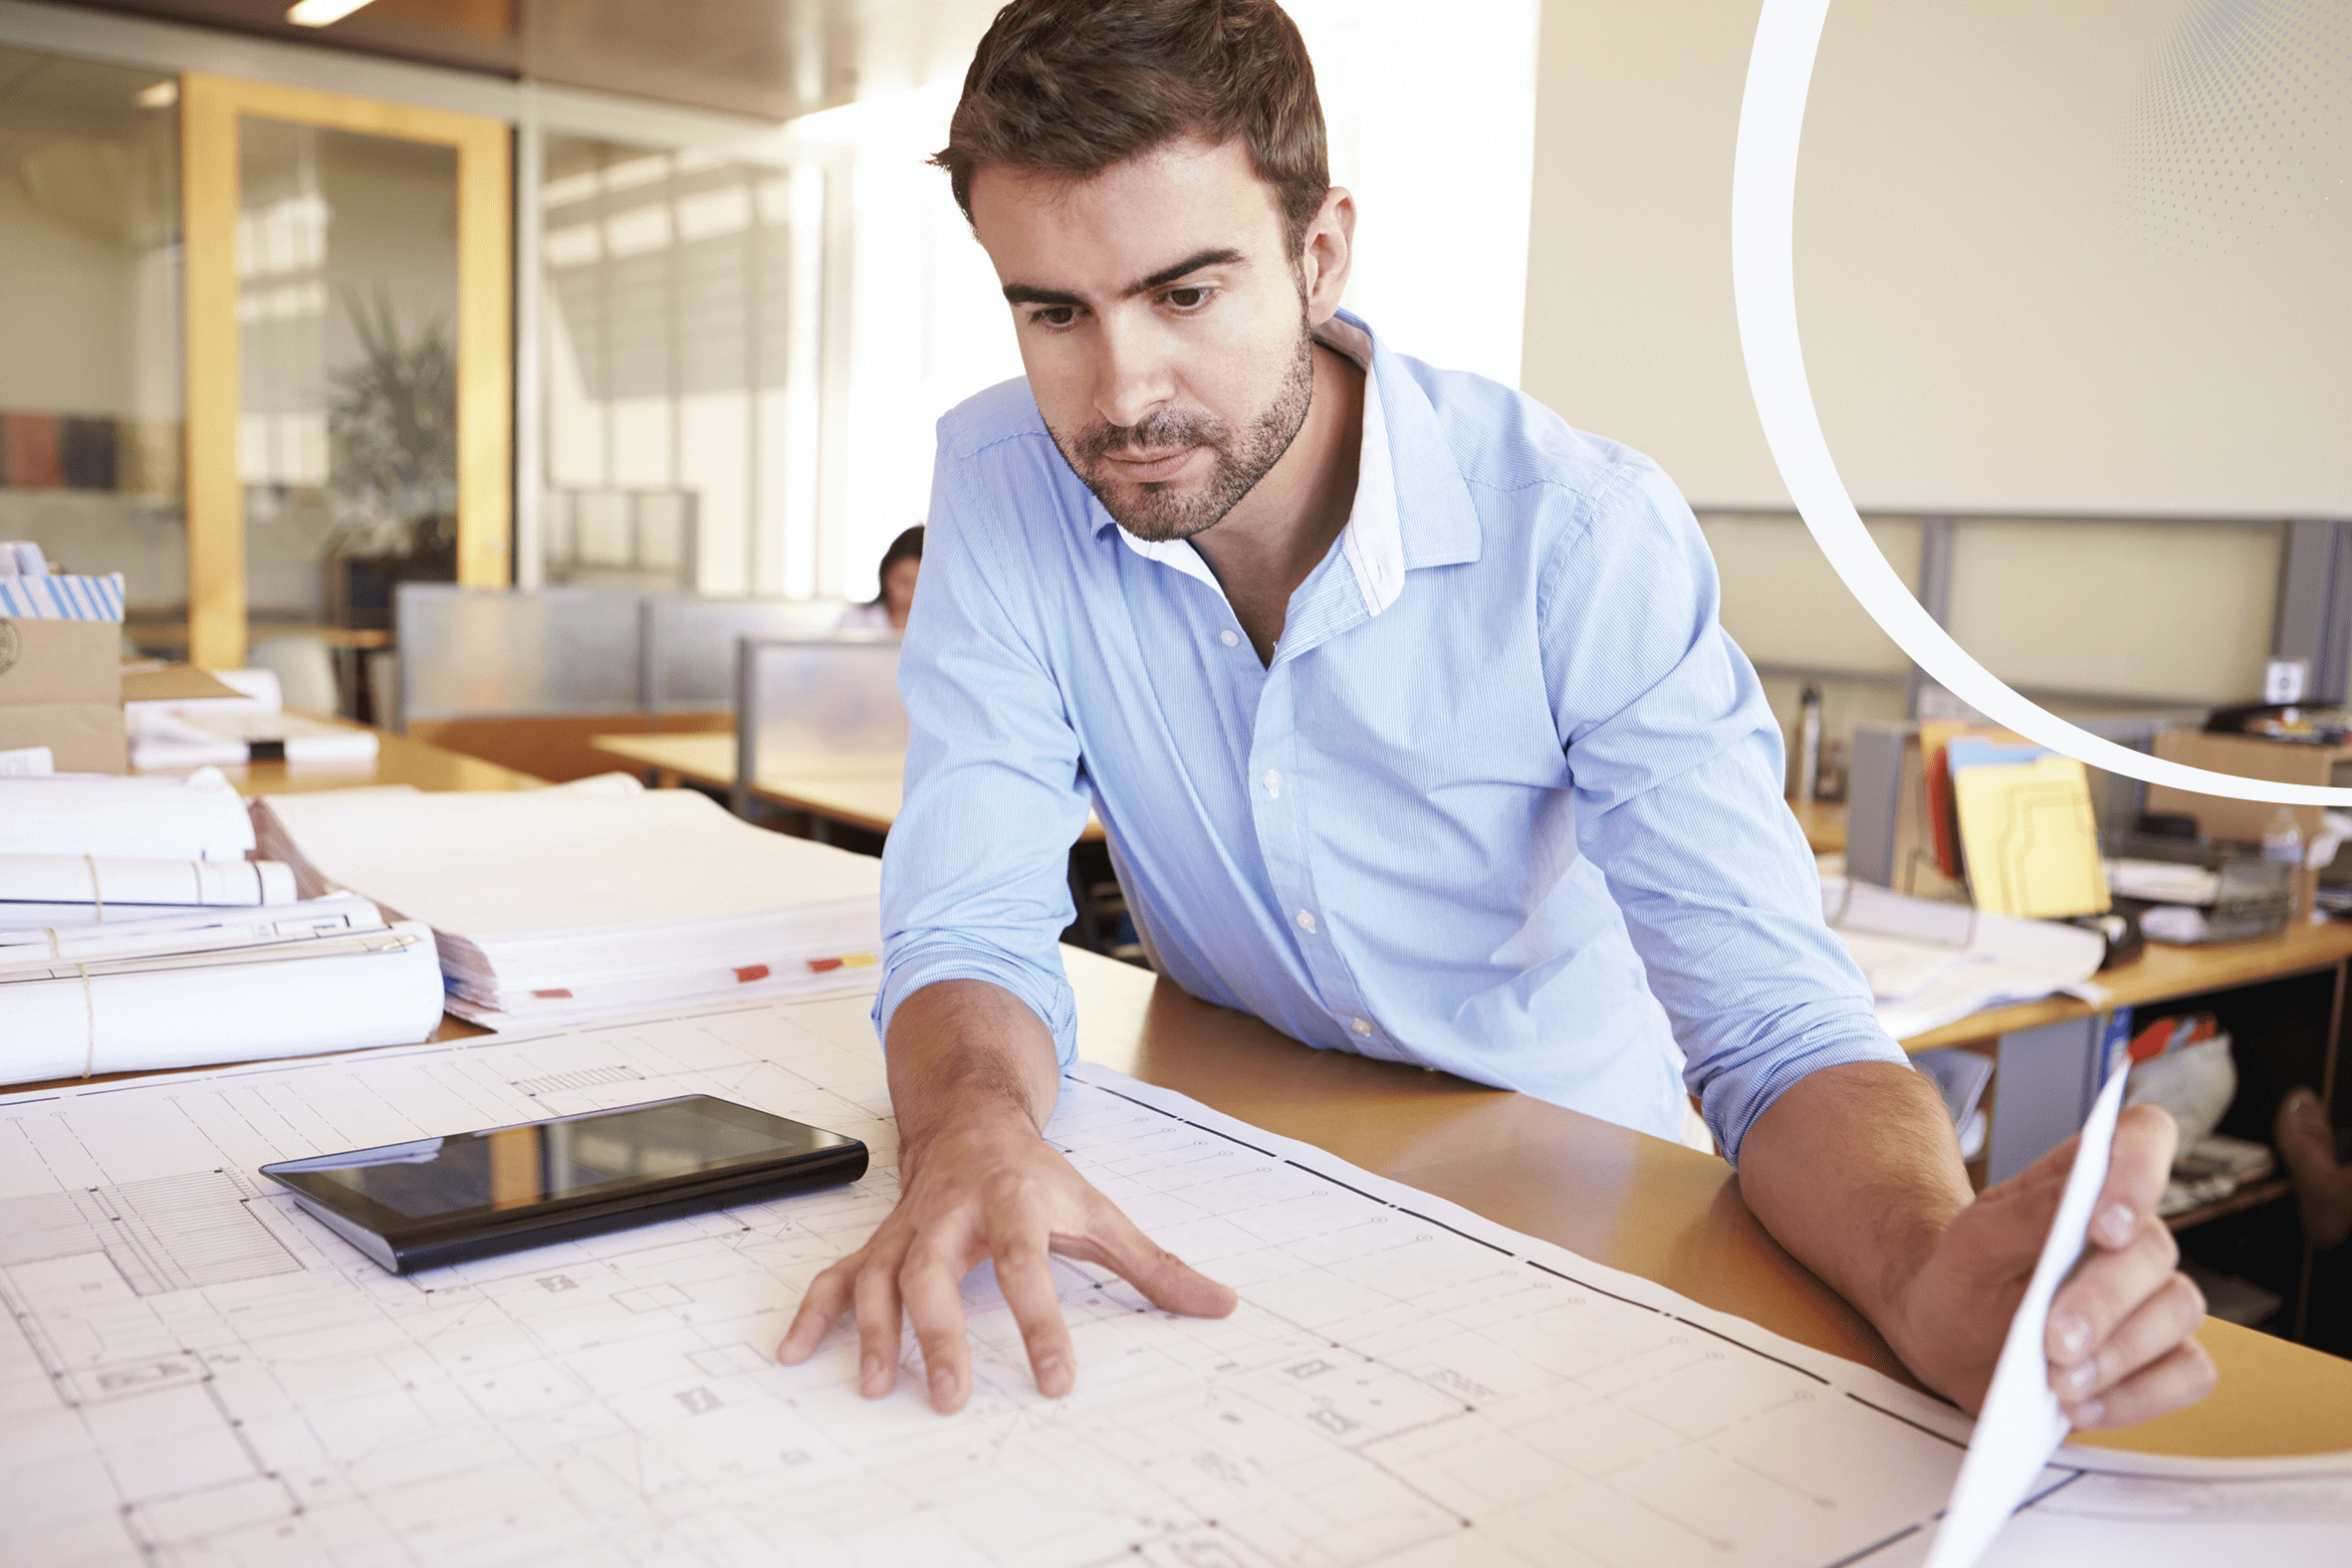 Male architect reviewing blueprints at desk